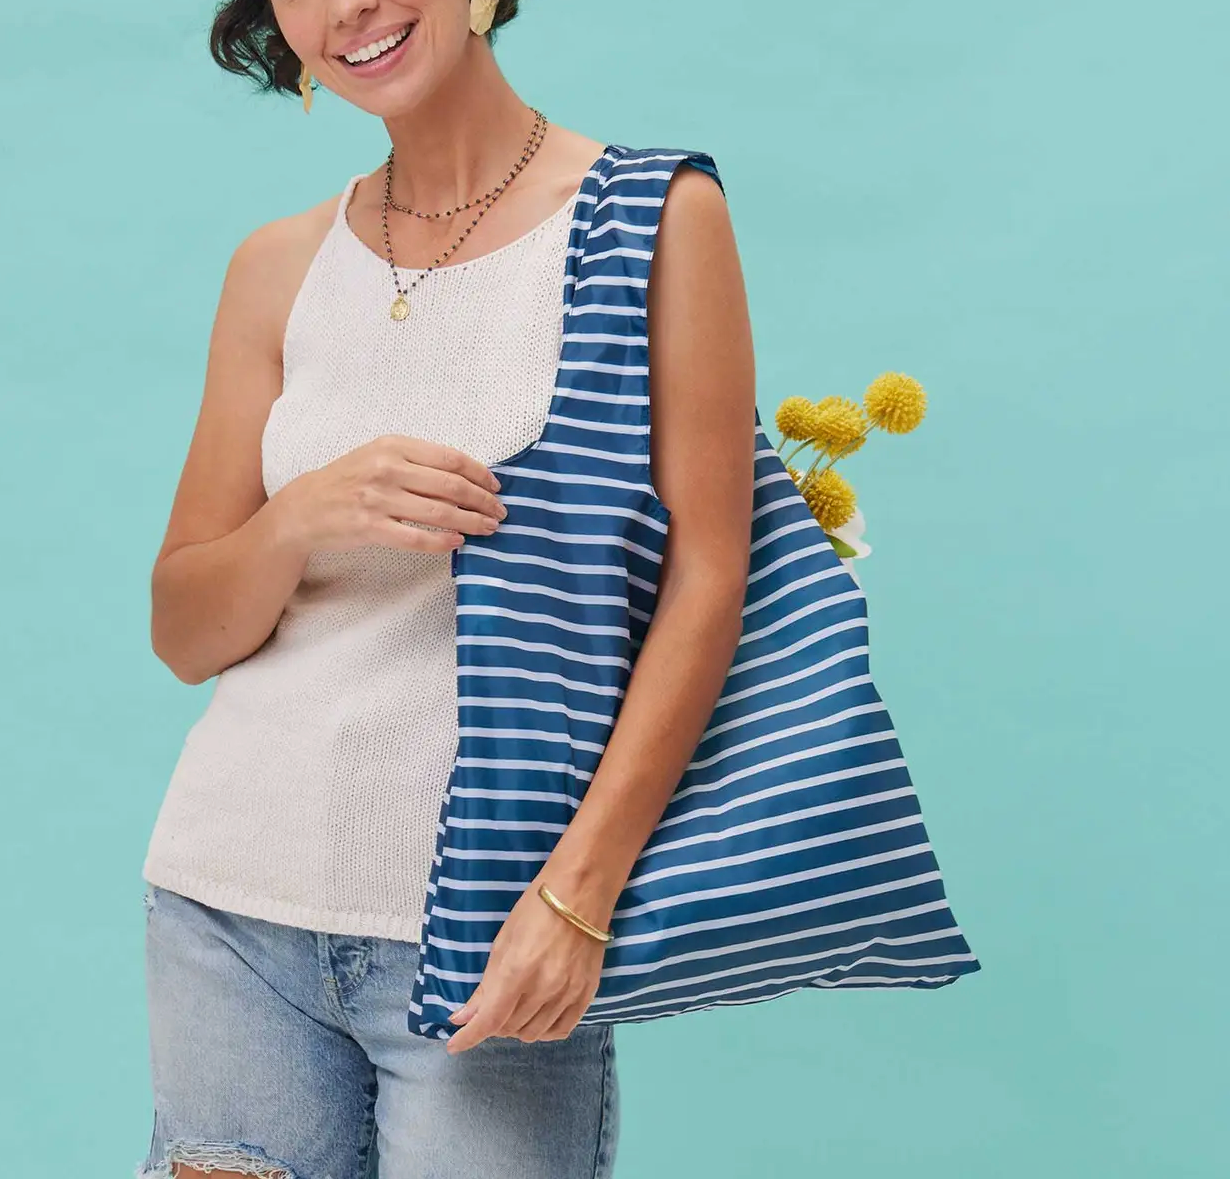 Reusable Shopping Bag - 19x24" Pocket Tote, Blue & White Stripe Design